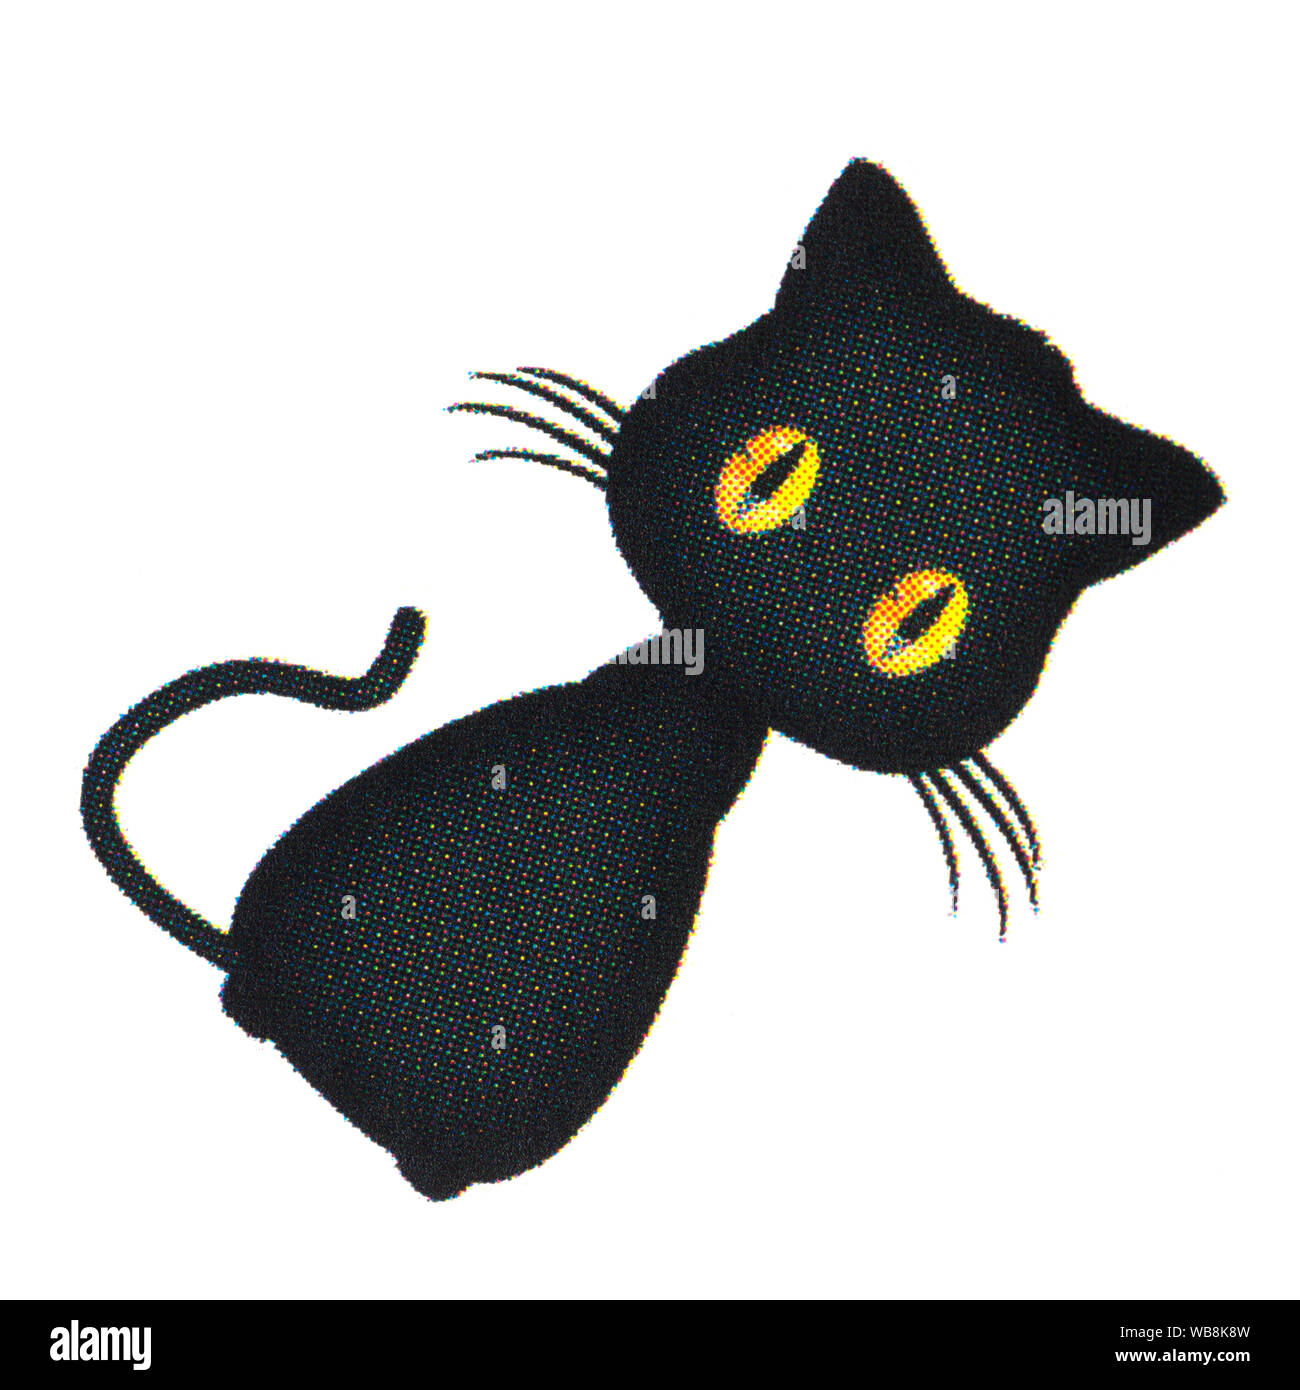 Black Cat Twitch Emote / Halloween Emote / Cute Emojis for 